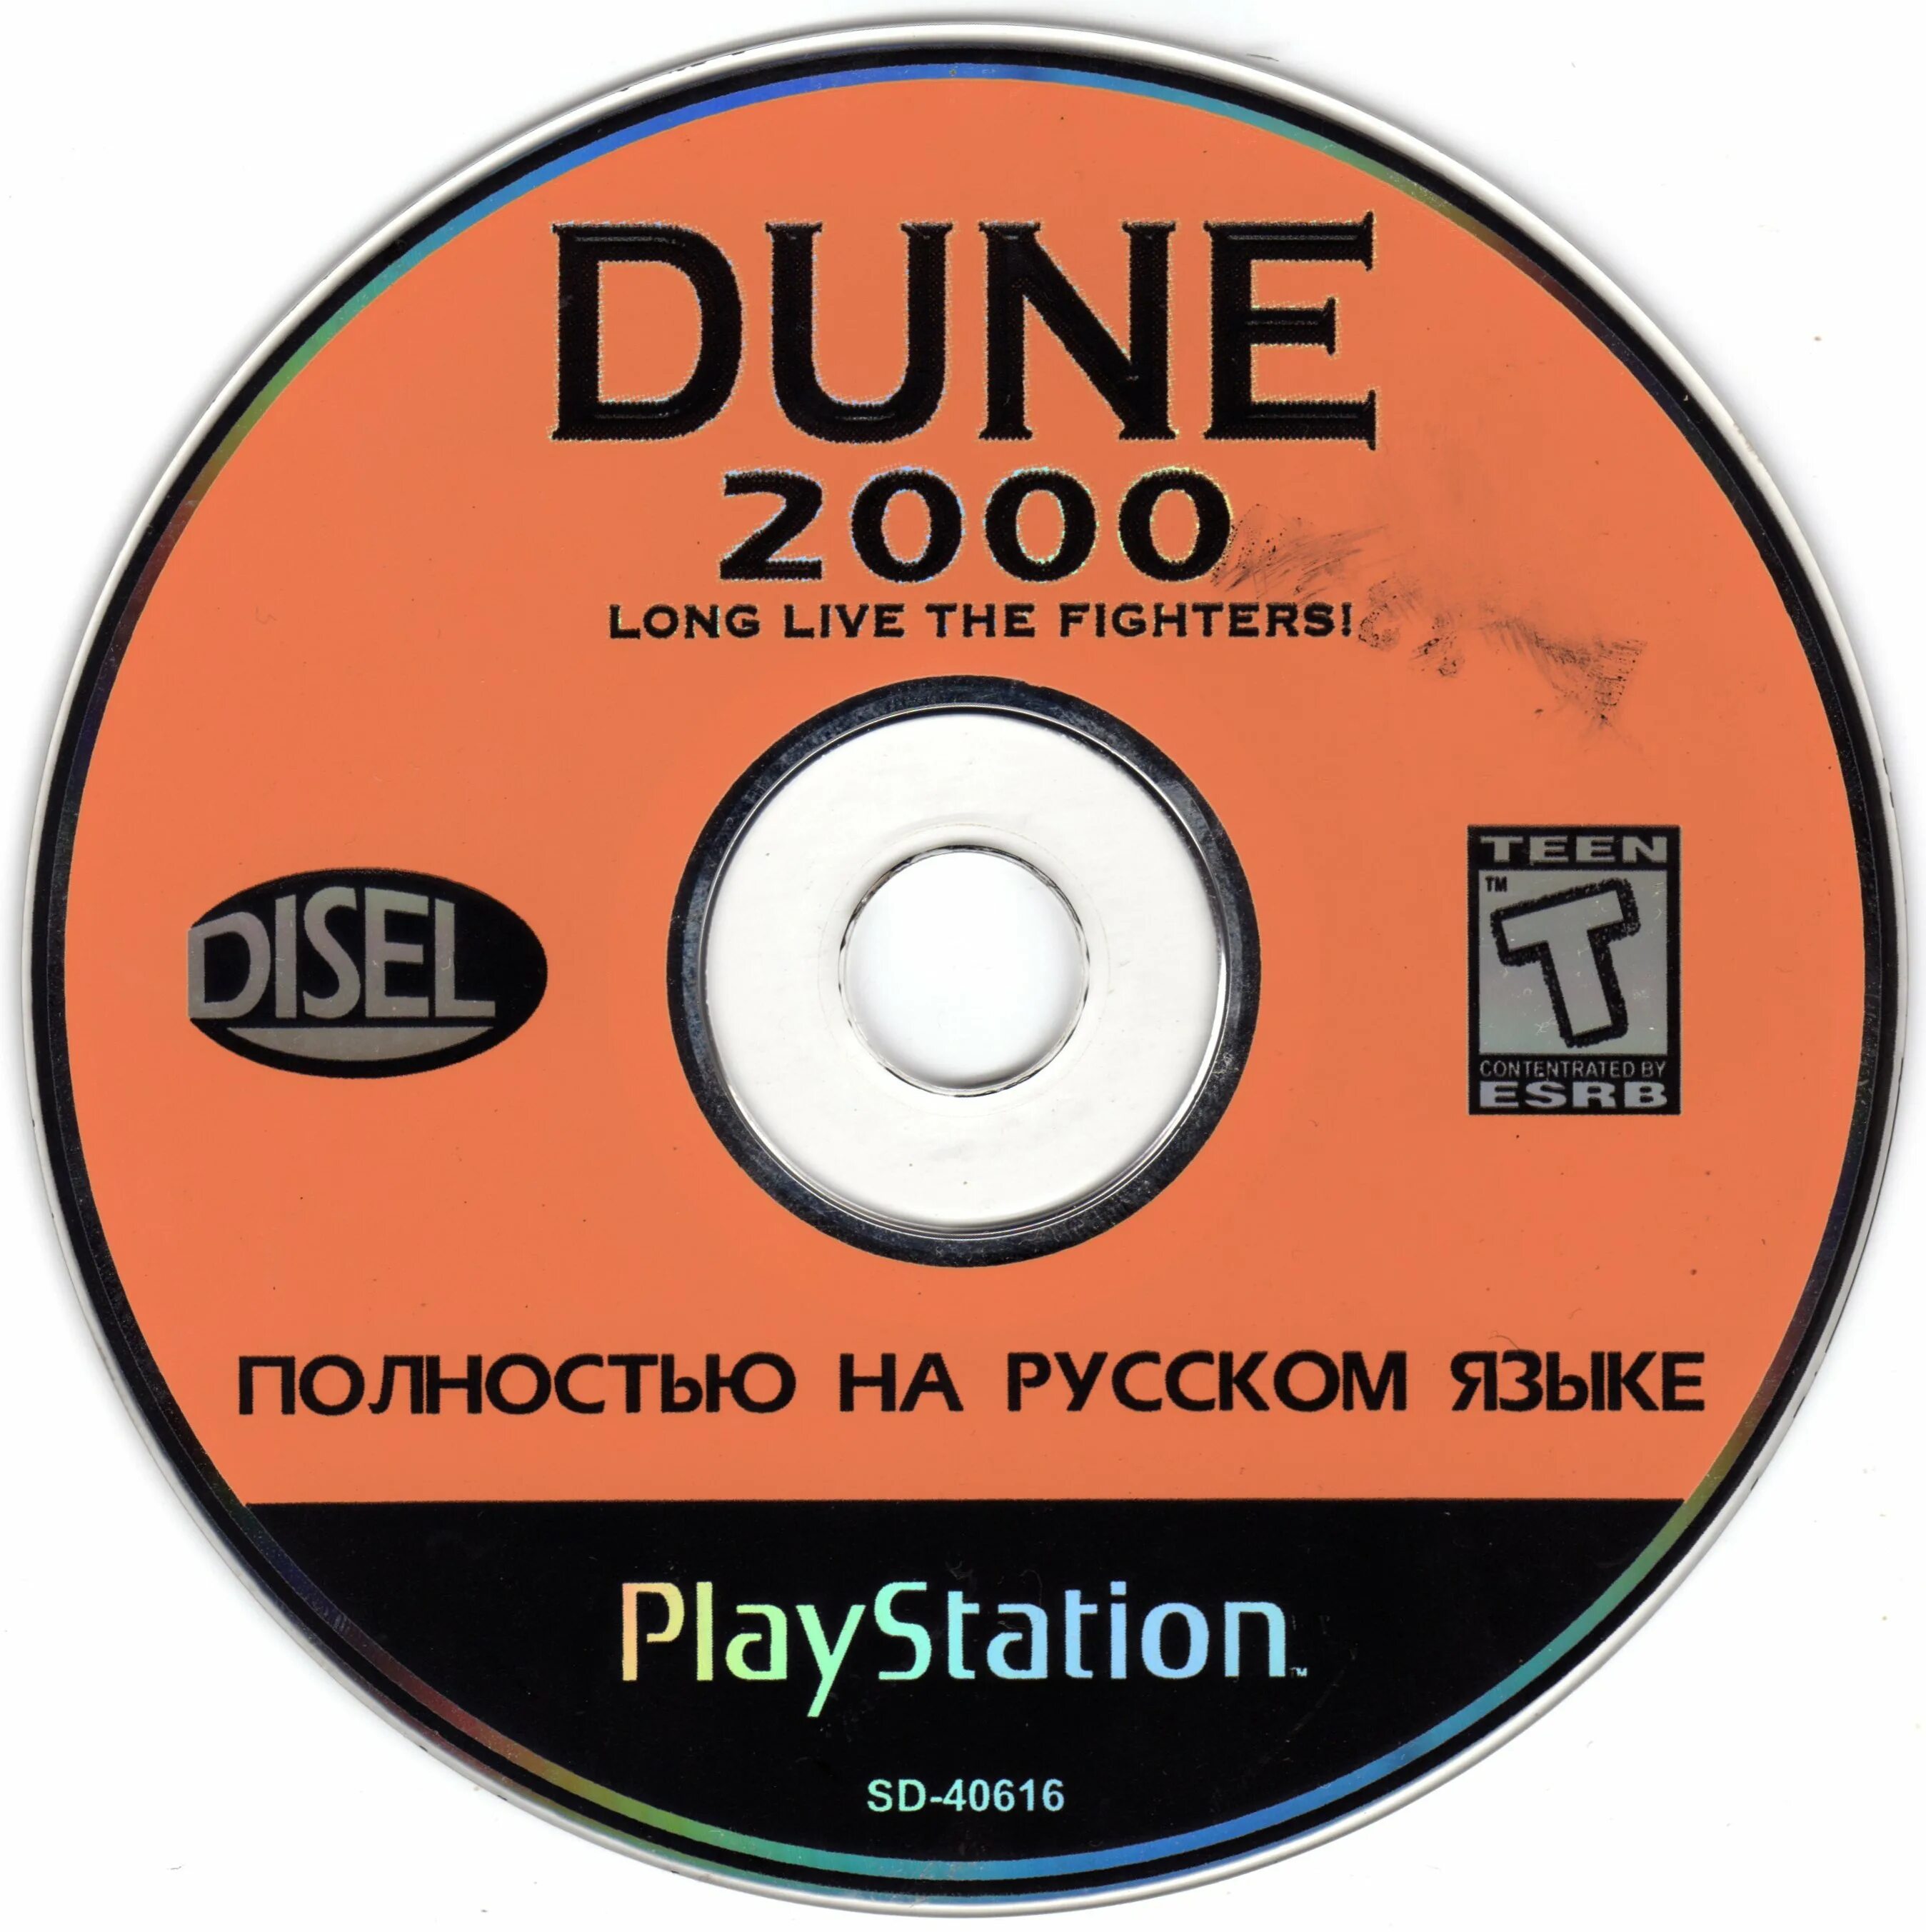 Dune 2000 ps1 Cover. Dune 2000 ps1. CD Box Dune 2000. Dune 2000 Remastered. Russian 2000